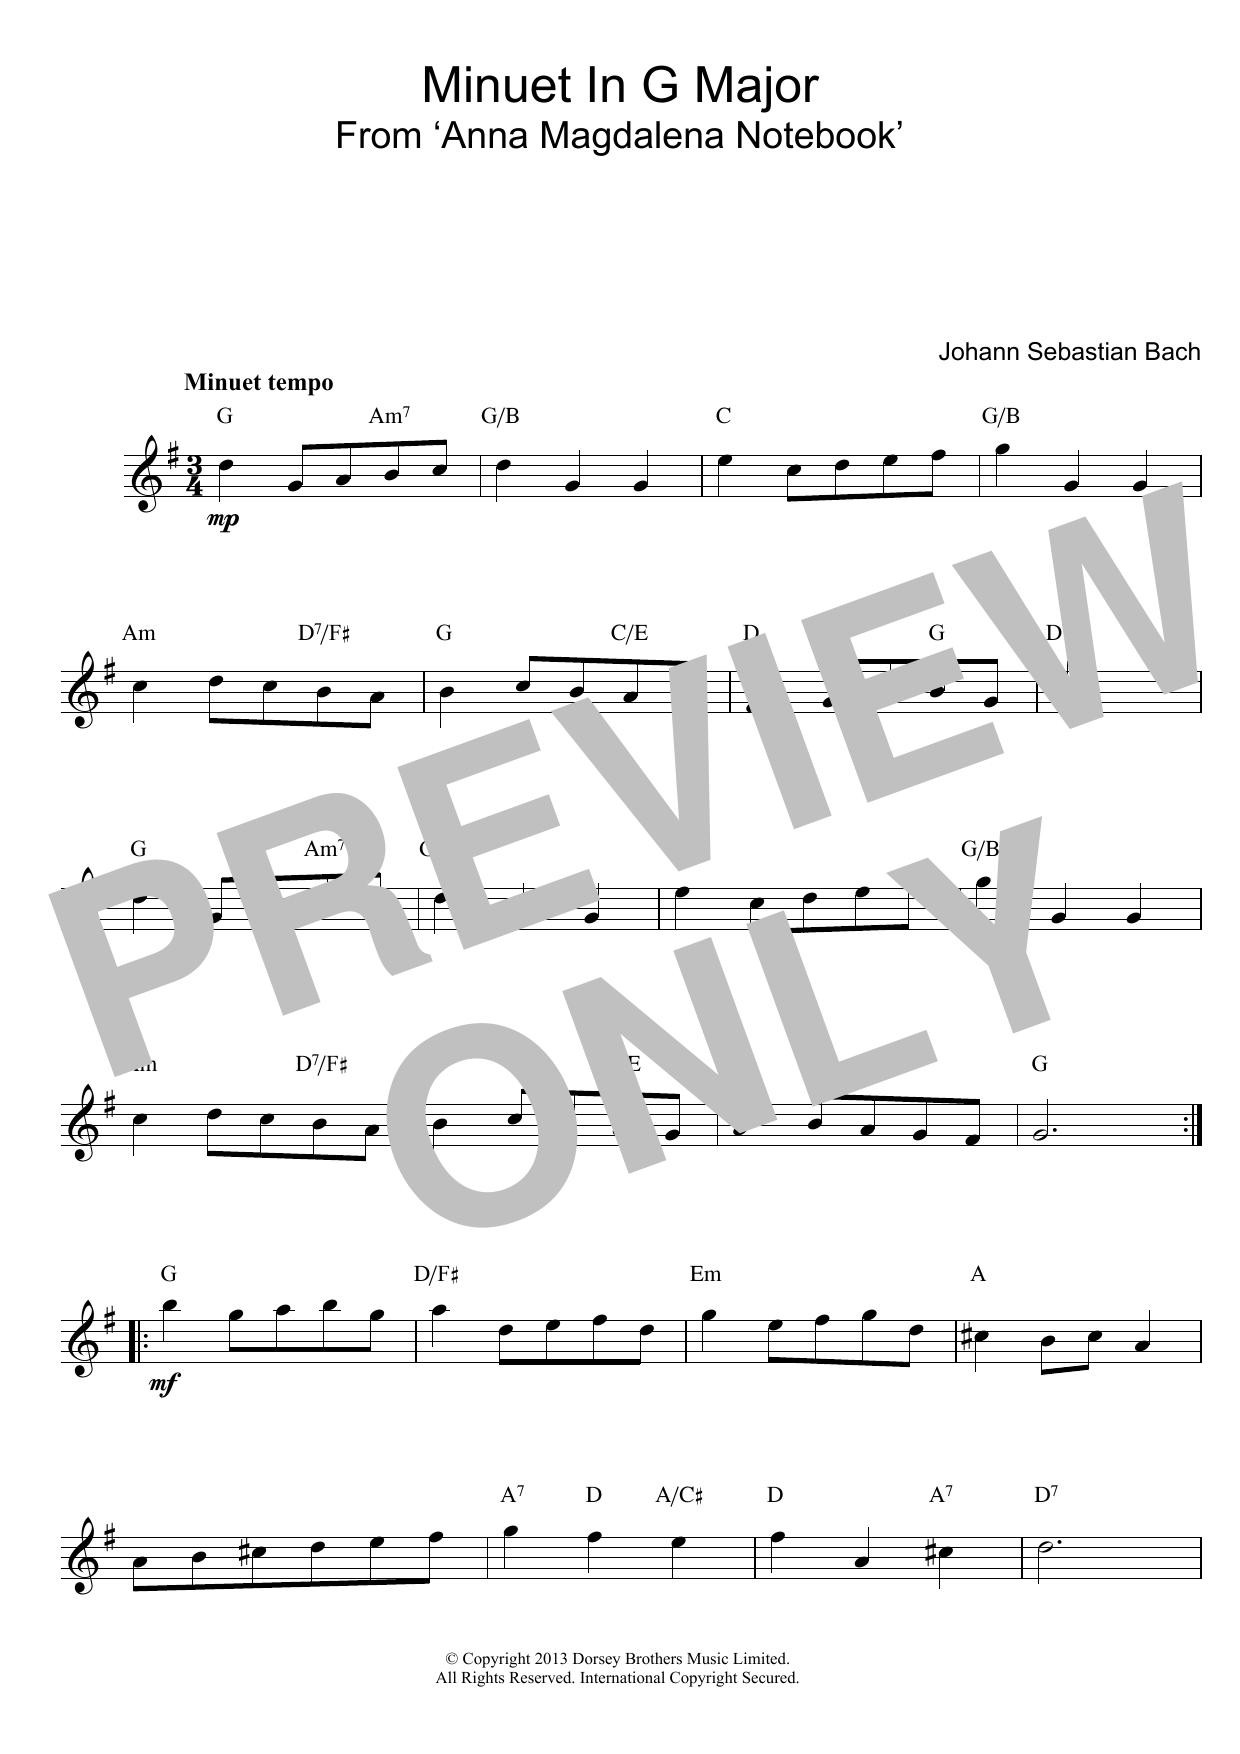 Johann Sebastian Bach Minuet In G Sheet Music Notes & Chords for Banjo - Download or Print PDF